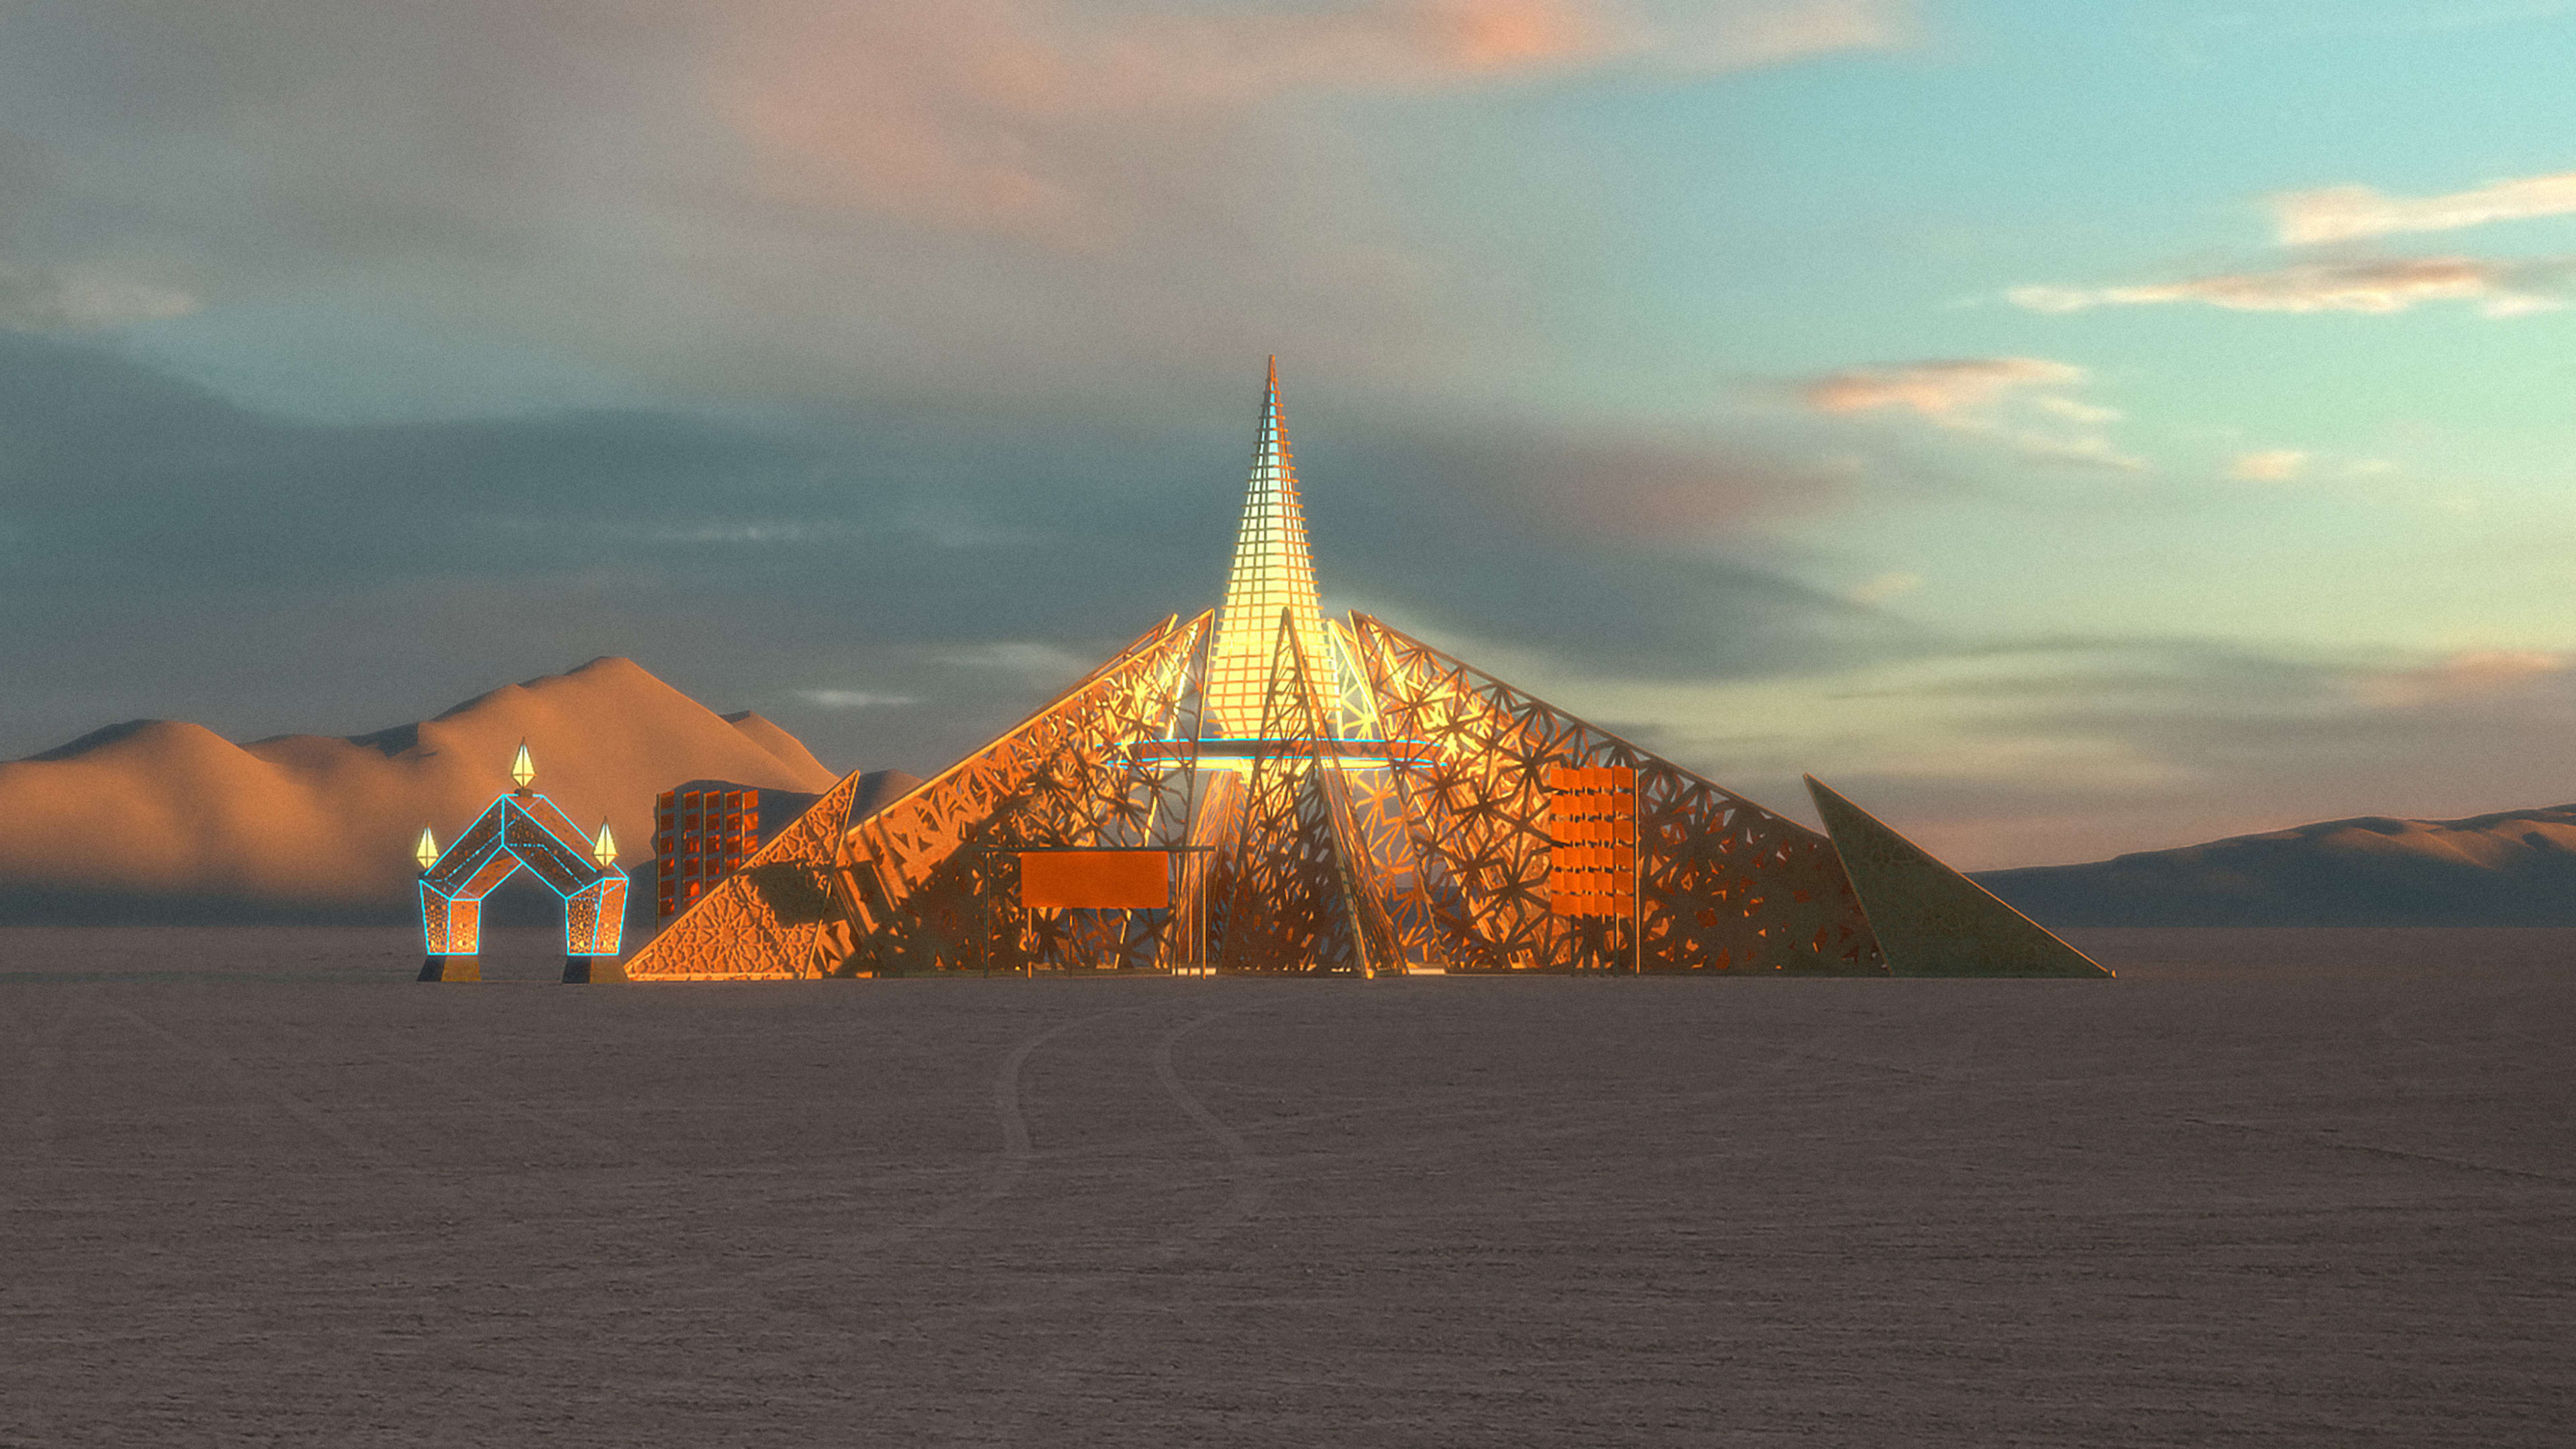 Inside the insane architecture of Burning Man 2020